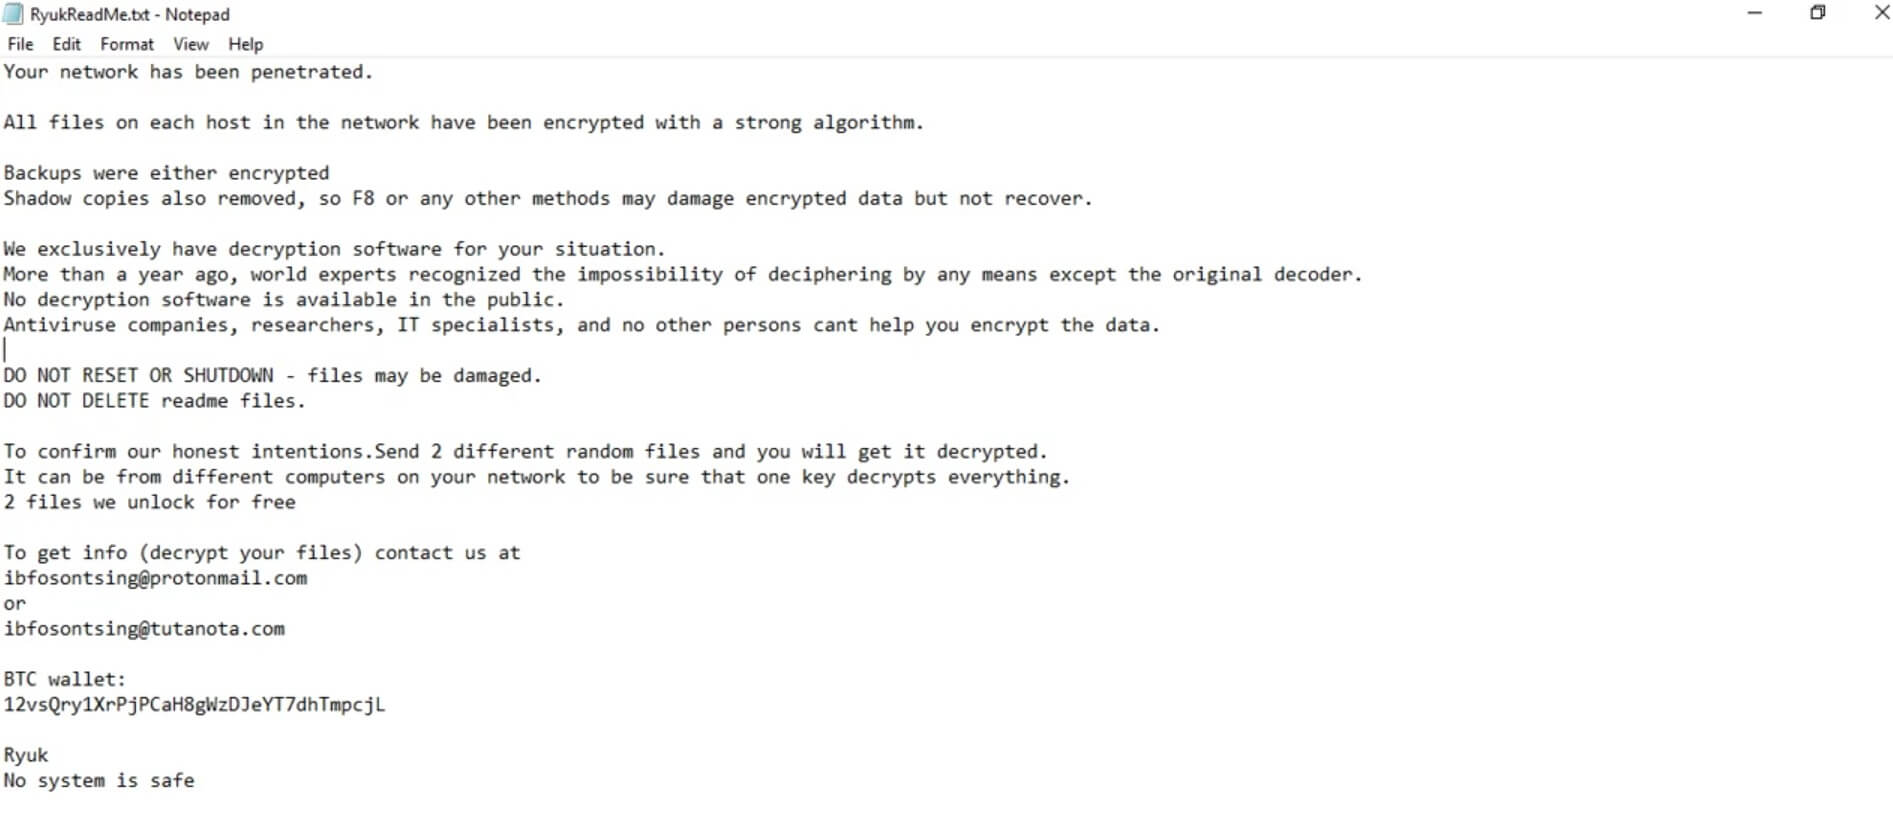 ryuk ransomware virus RYK extension ransom note message